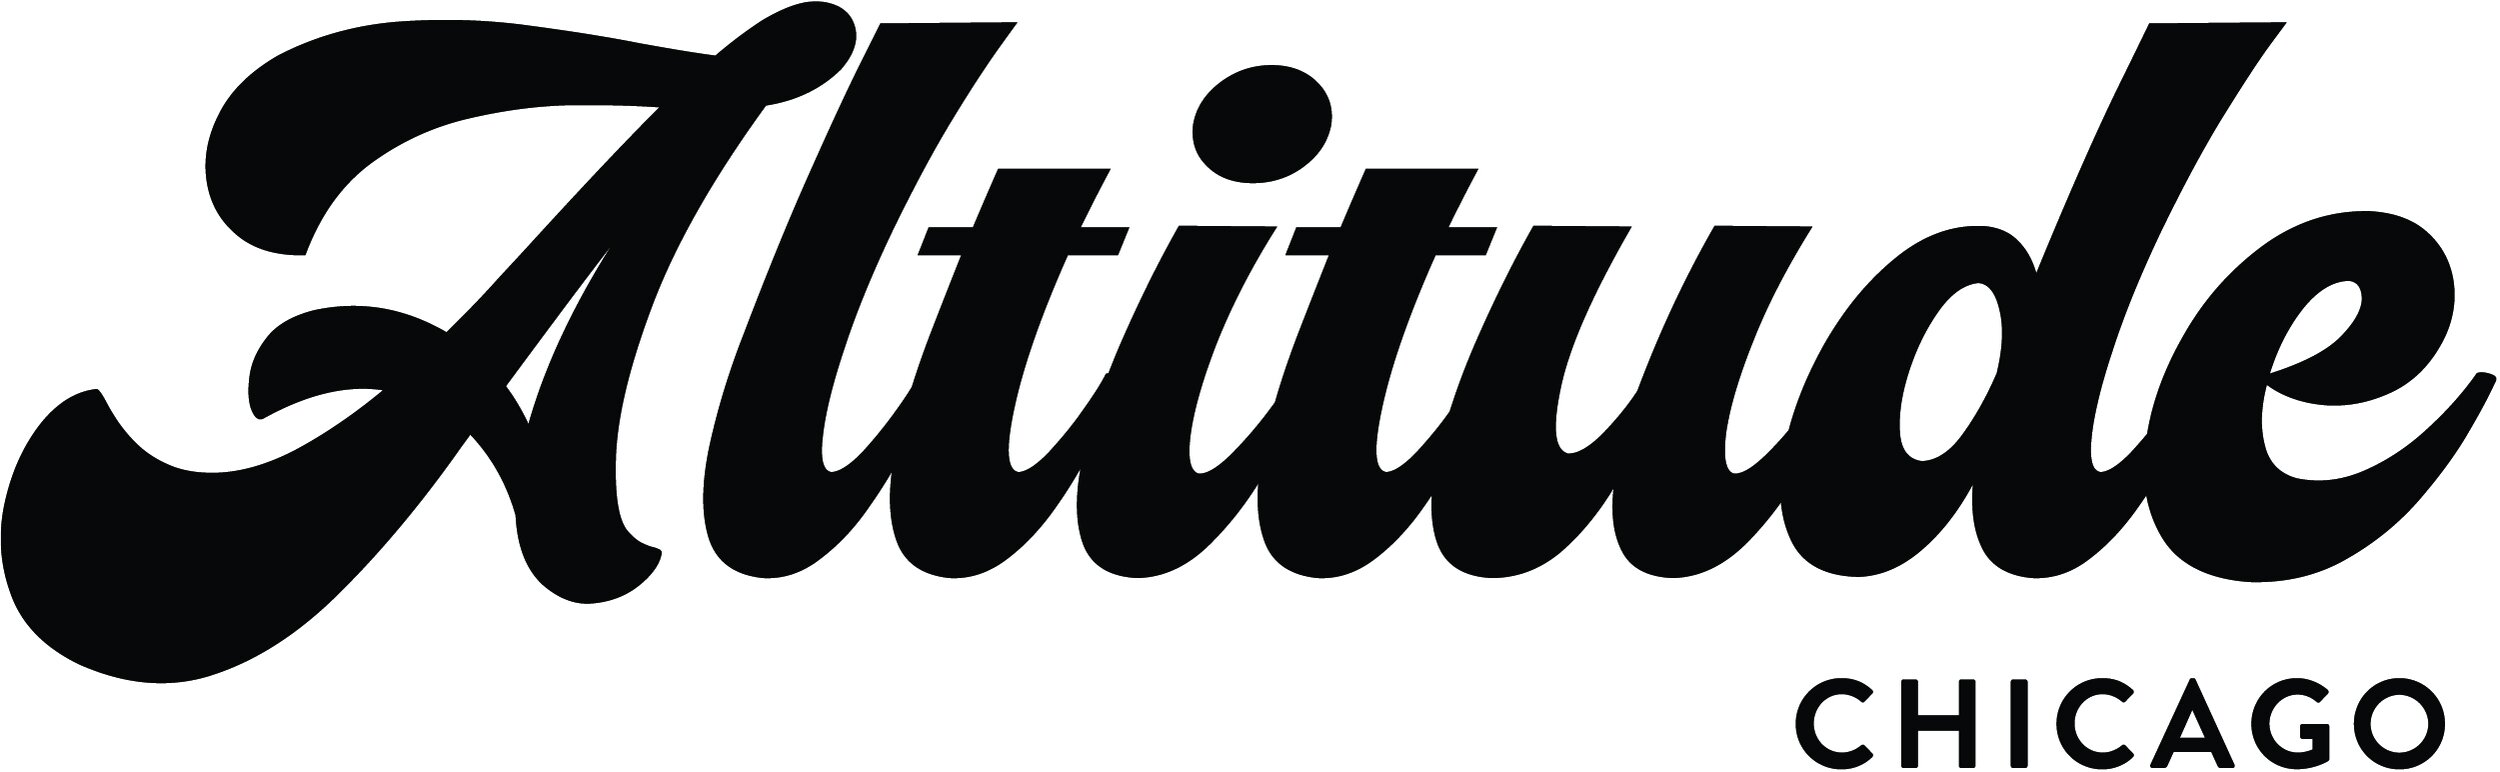 Altitude-Chicago-logo-2021 (1).jpg